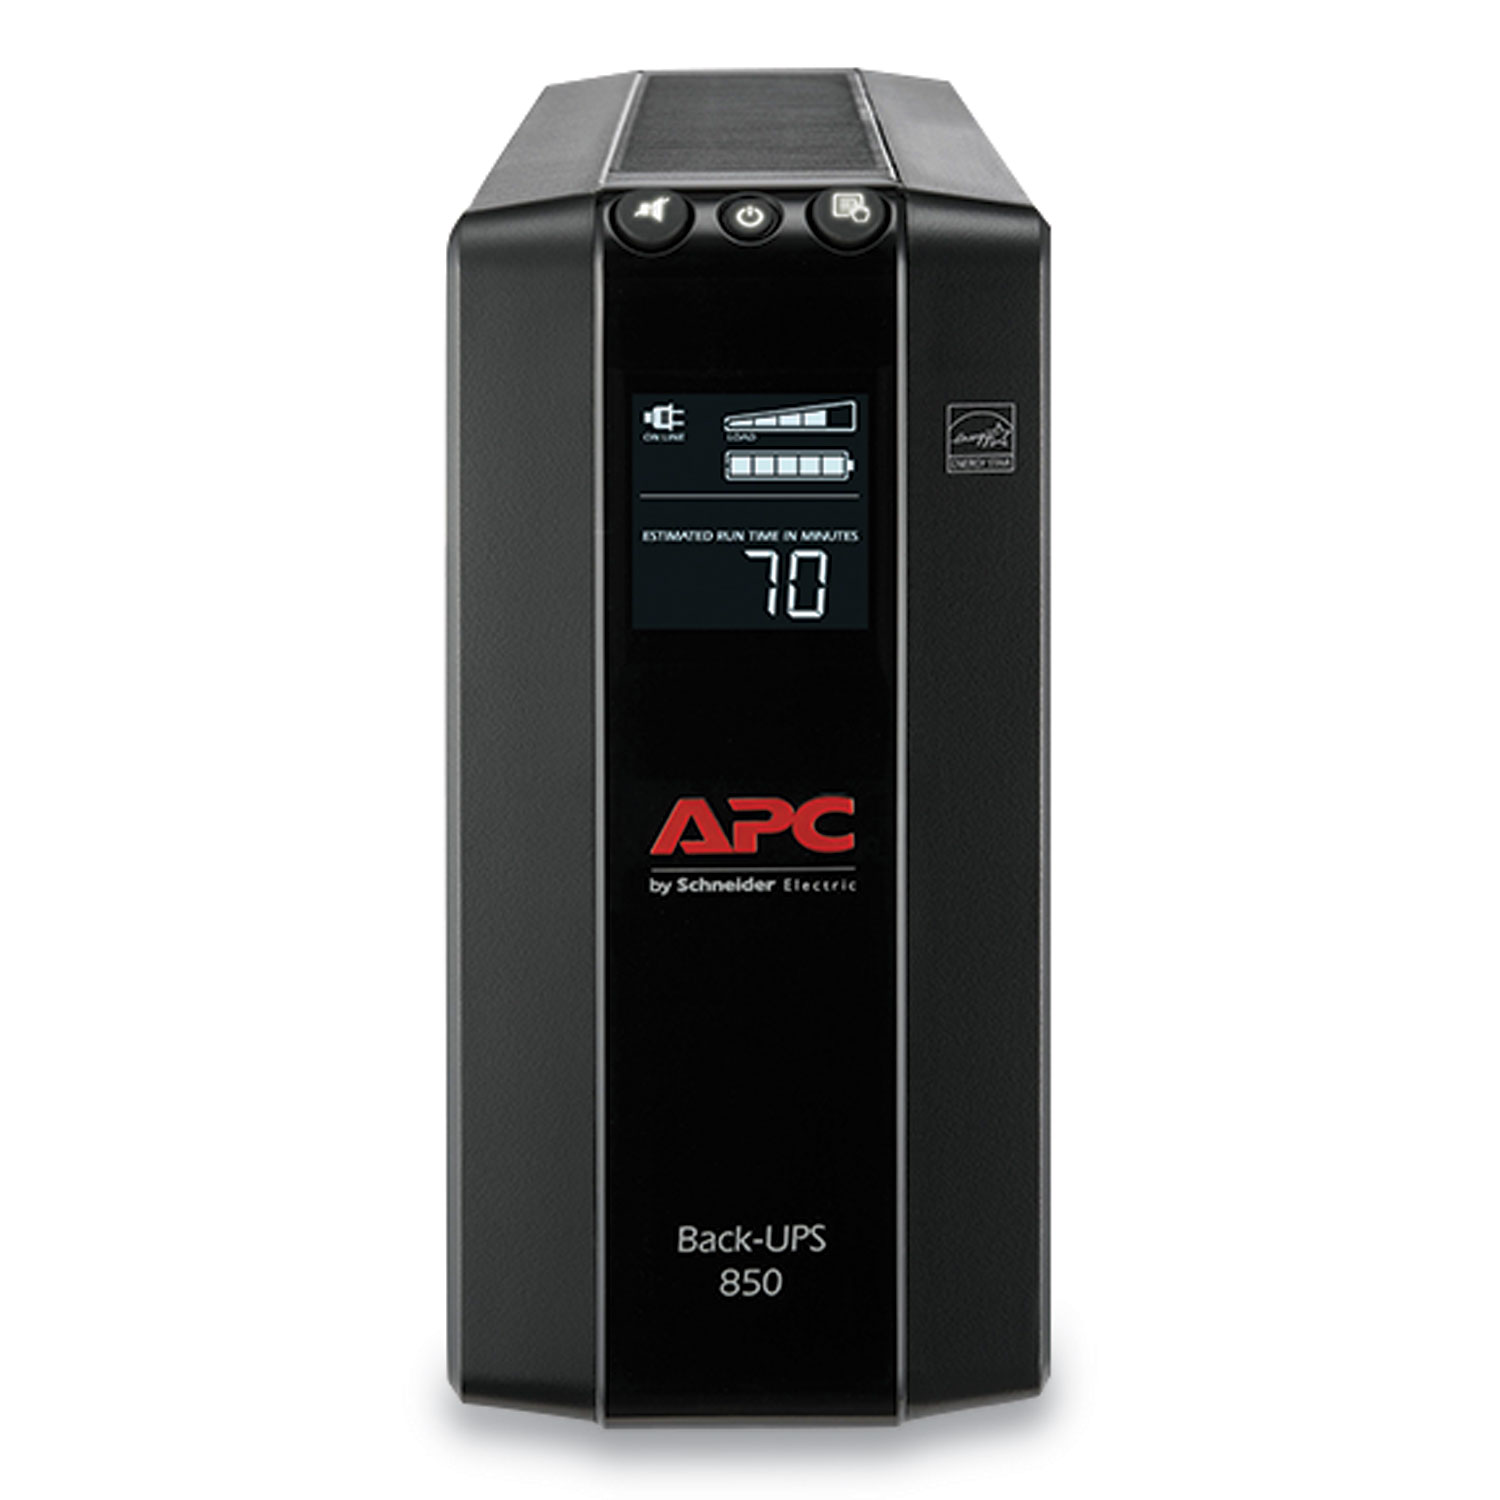  APC BX850M BX850M Back-UPS PRO BX Series Compact Tower Battery Backup System, 8 Outlets, 850VA, 1103 J (SEU2724570) 